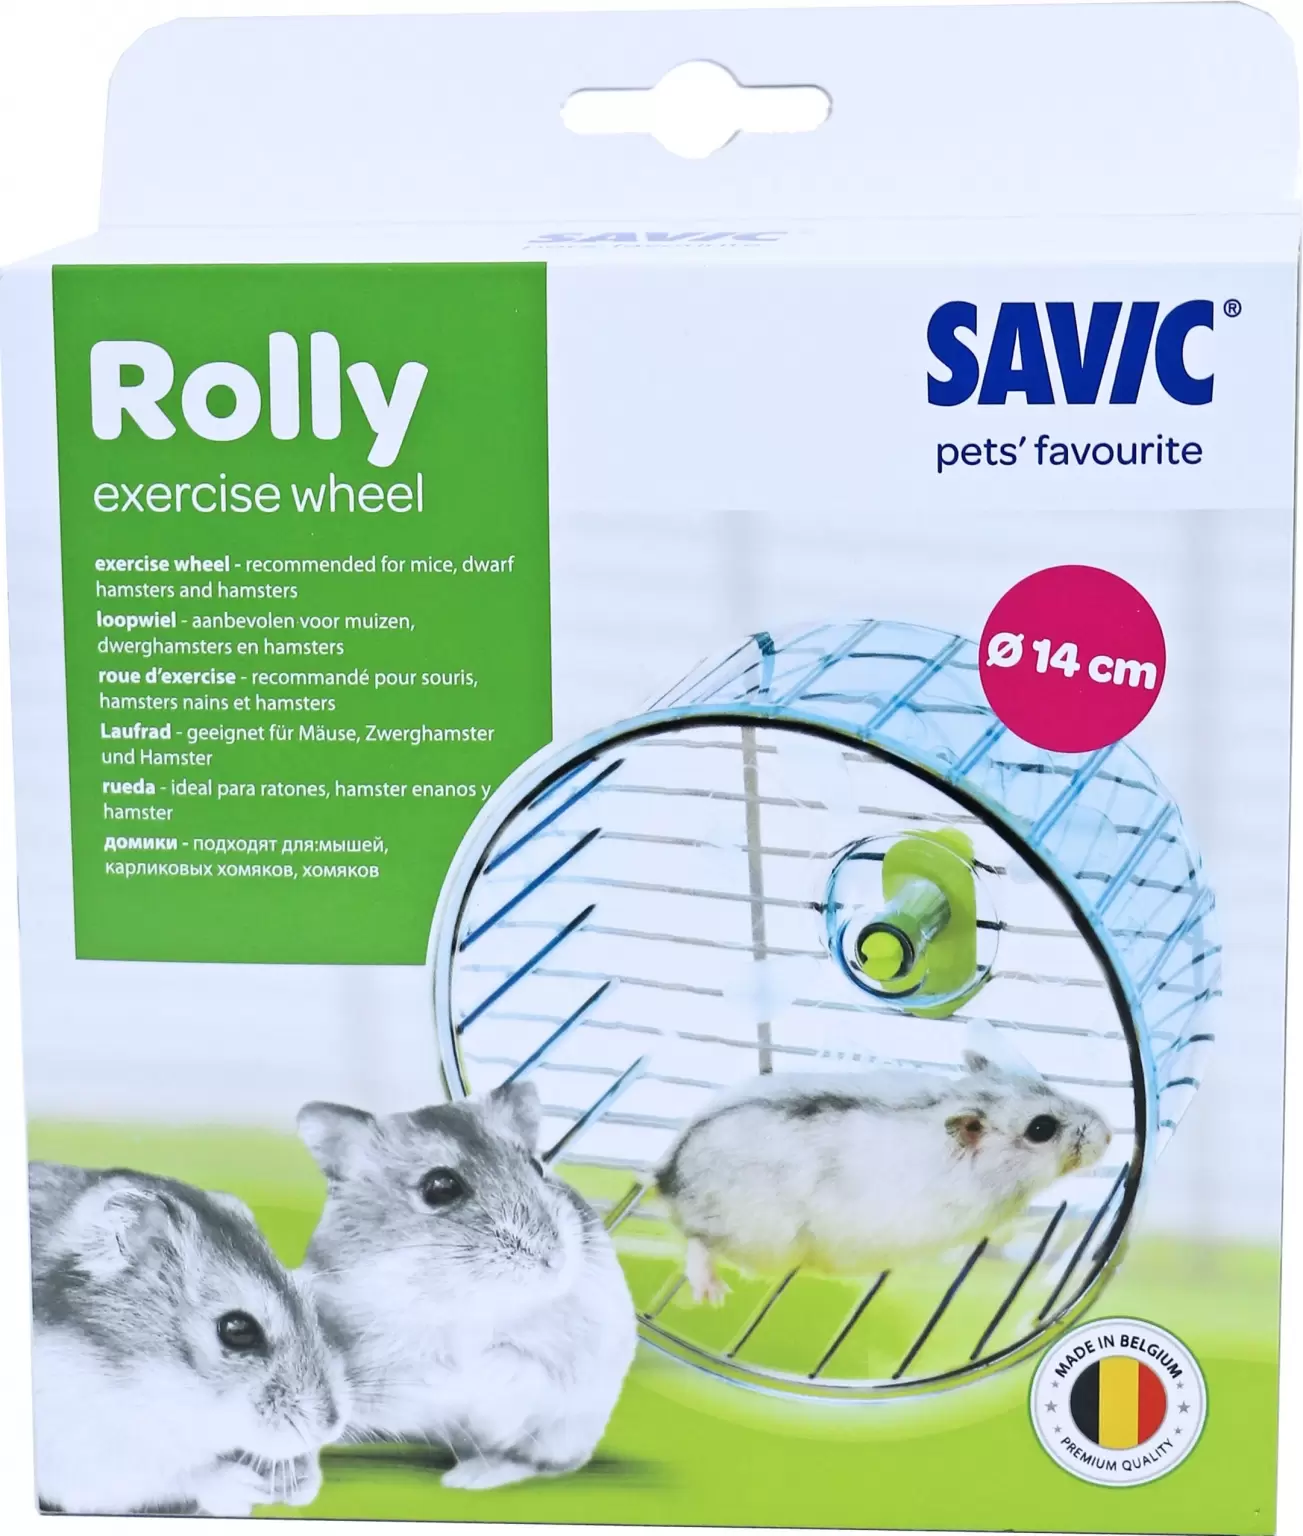 genezen Wapenstilstand Kunstmatig Plastic hamstermolen rolly Medium - Tuincentrum Eurofleur